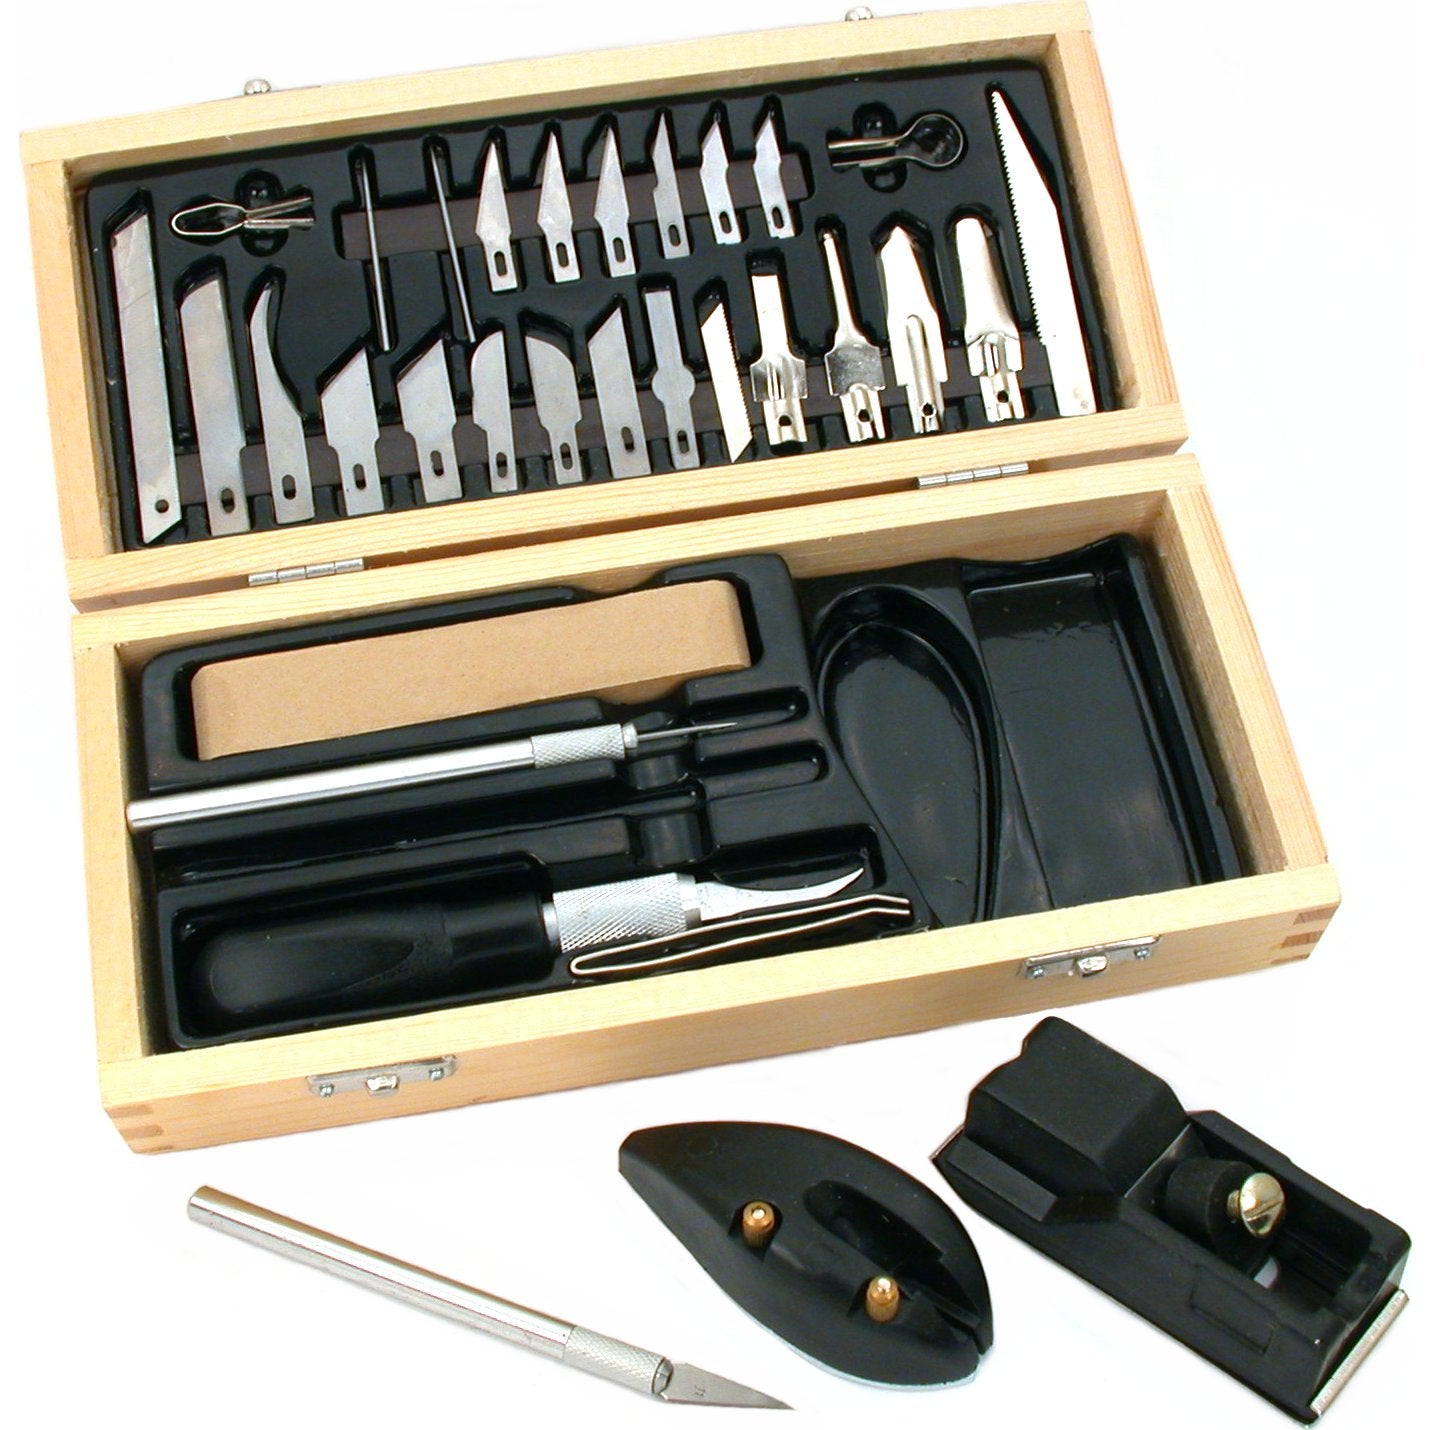 Assorted Hobby Knife Set Art Crafts Craft Repair Model Building Tools 30Pcs